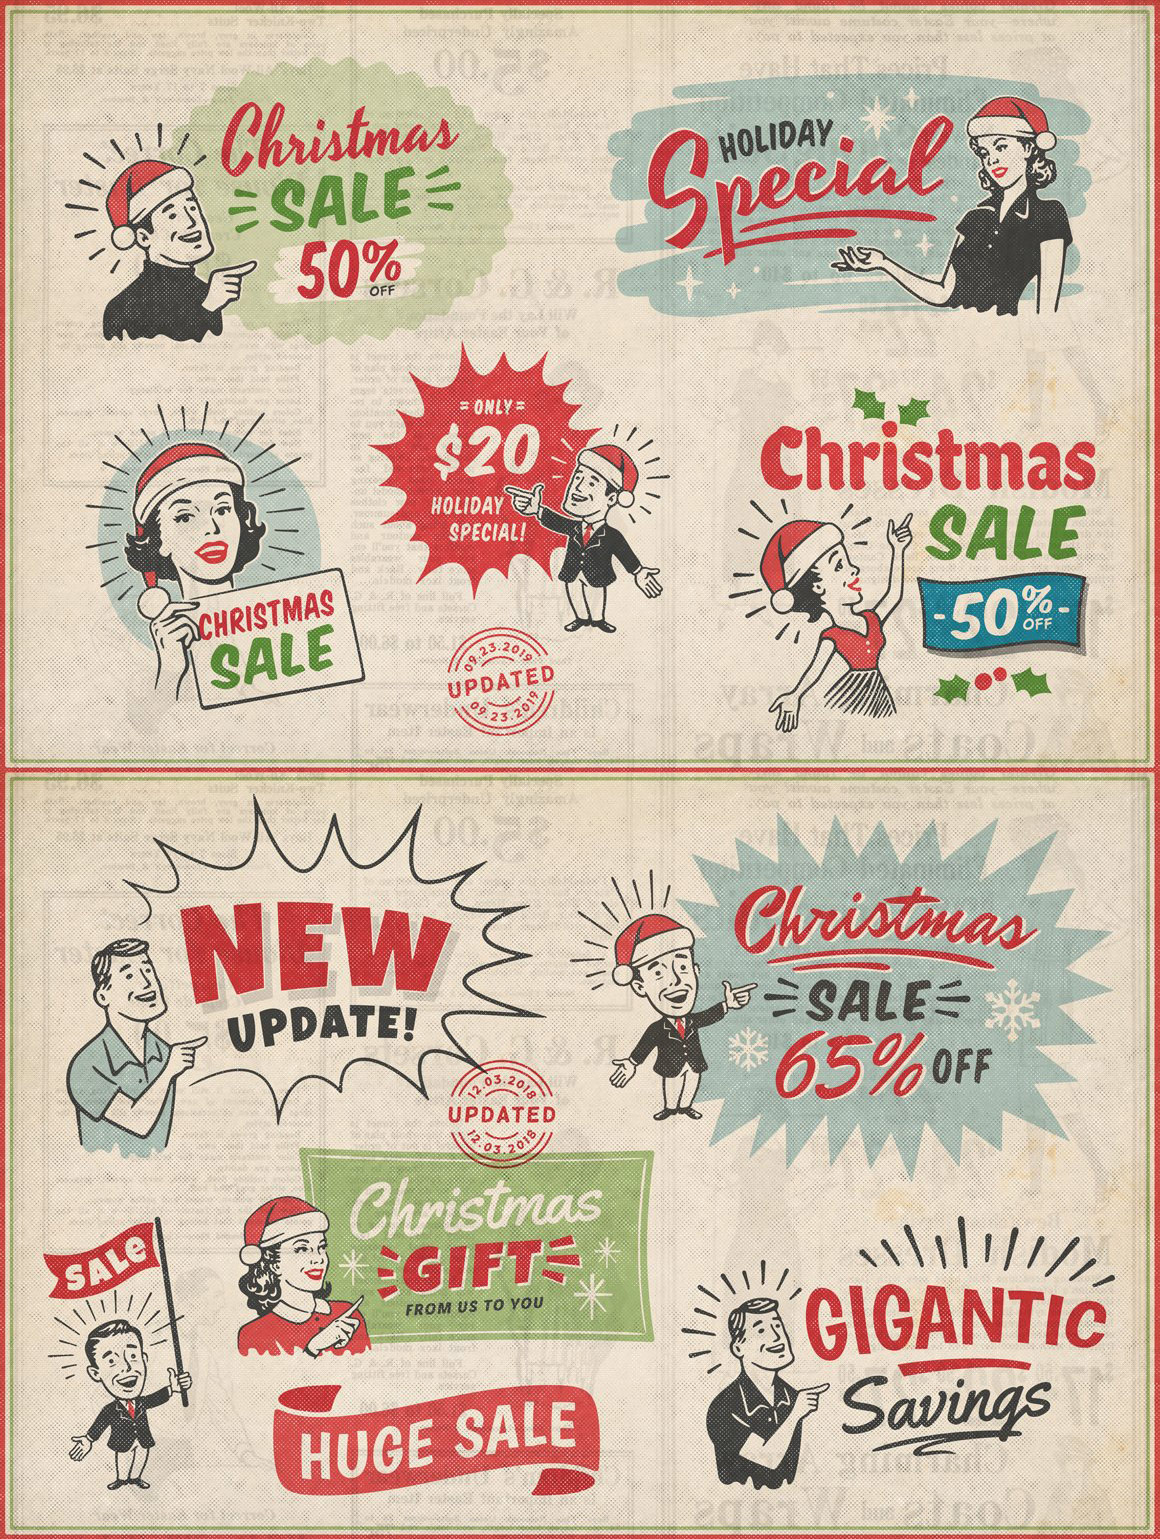 1950s-retro-style-vintage-ad-templates